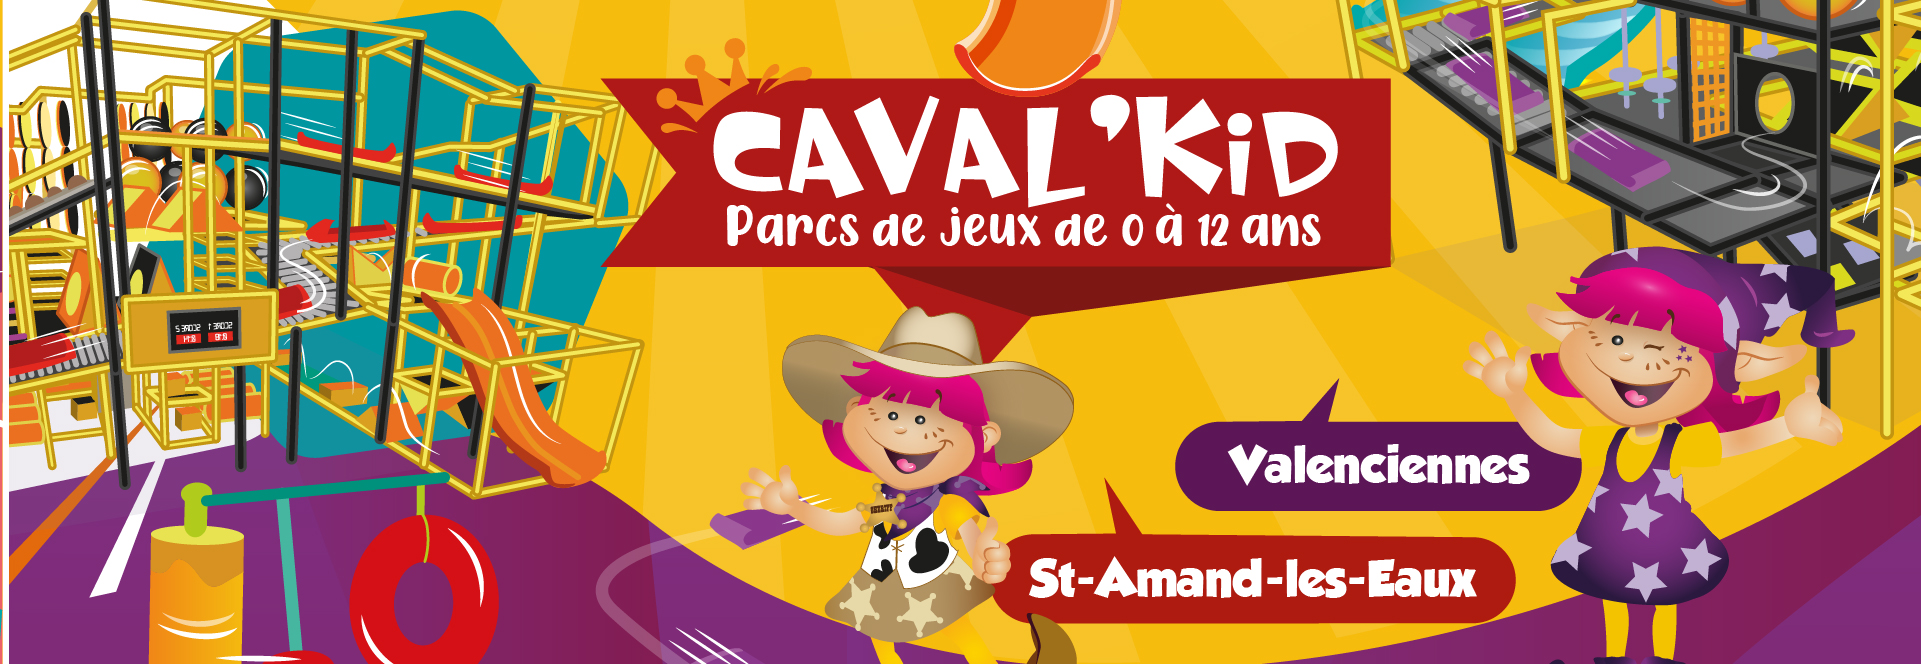 caval-kid-baner-1920x550-2-05